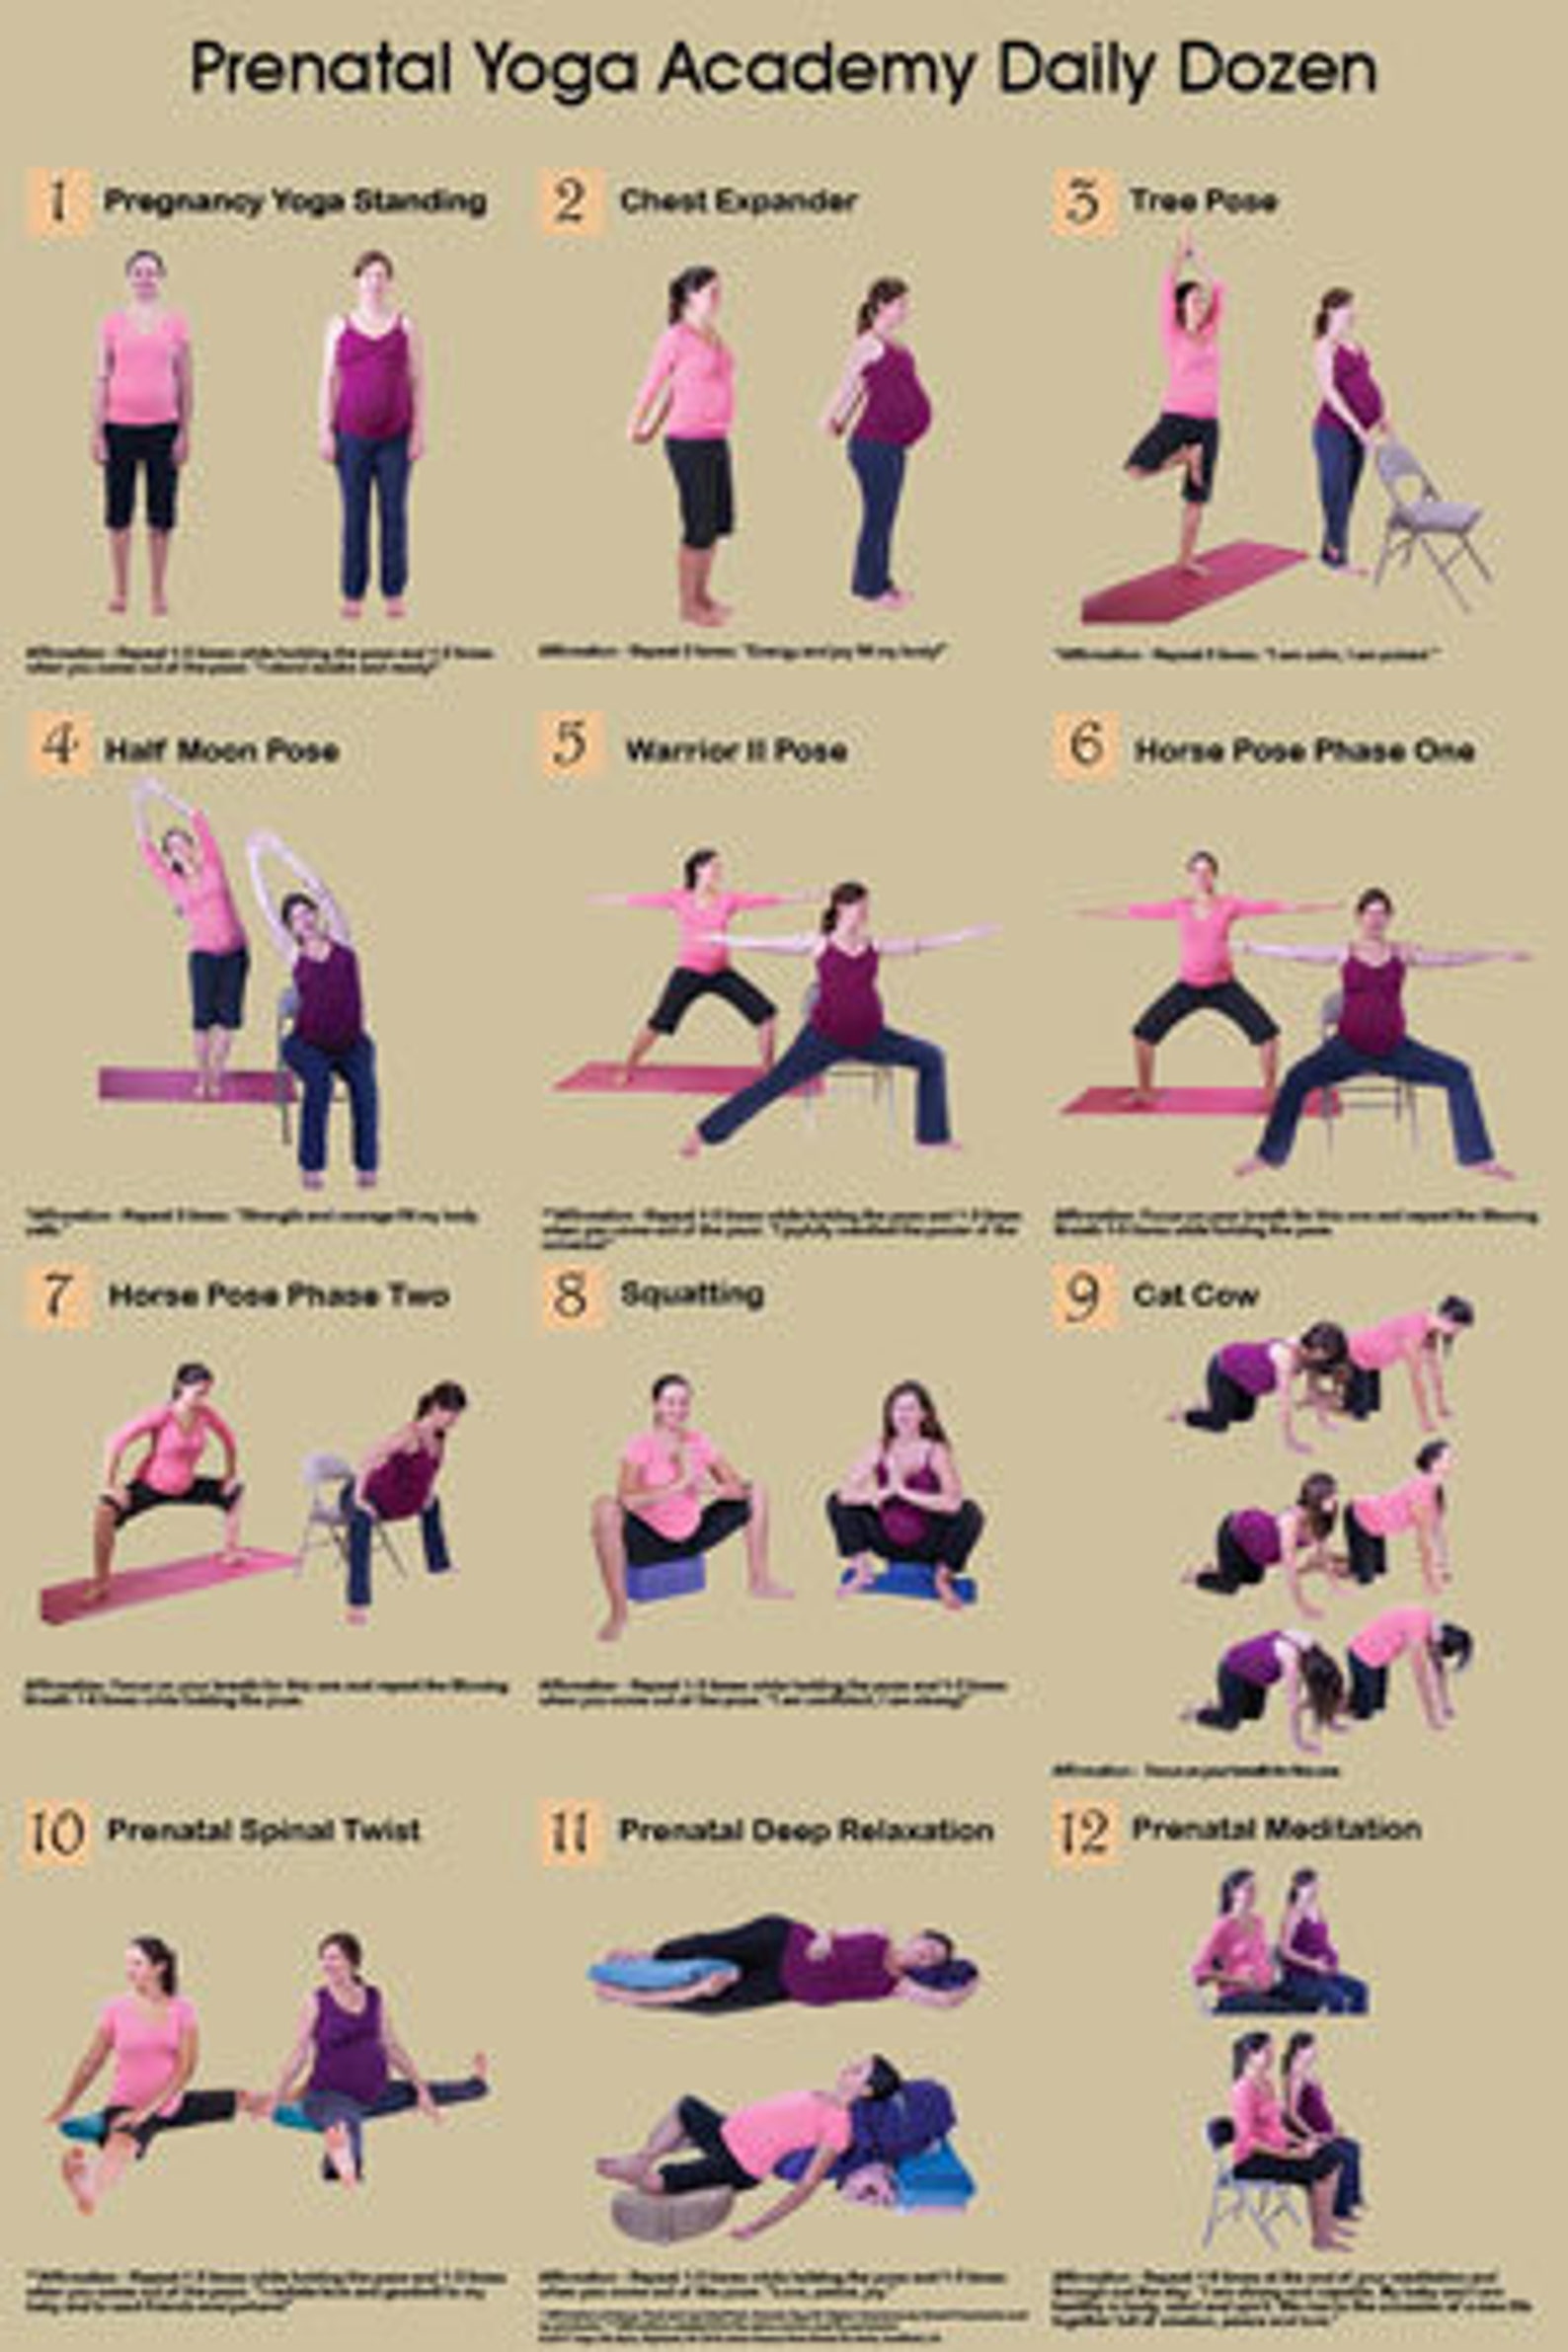 prenatal-yoga-academy-daily-dozen-yoga-during-pregnancy-poster-etsy